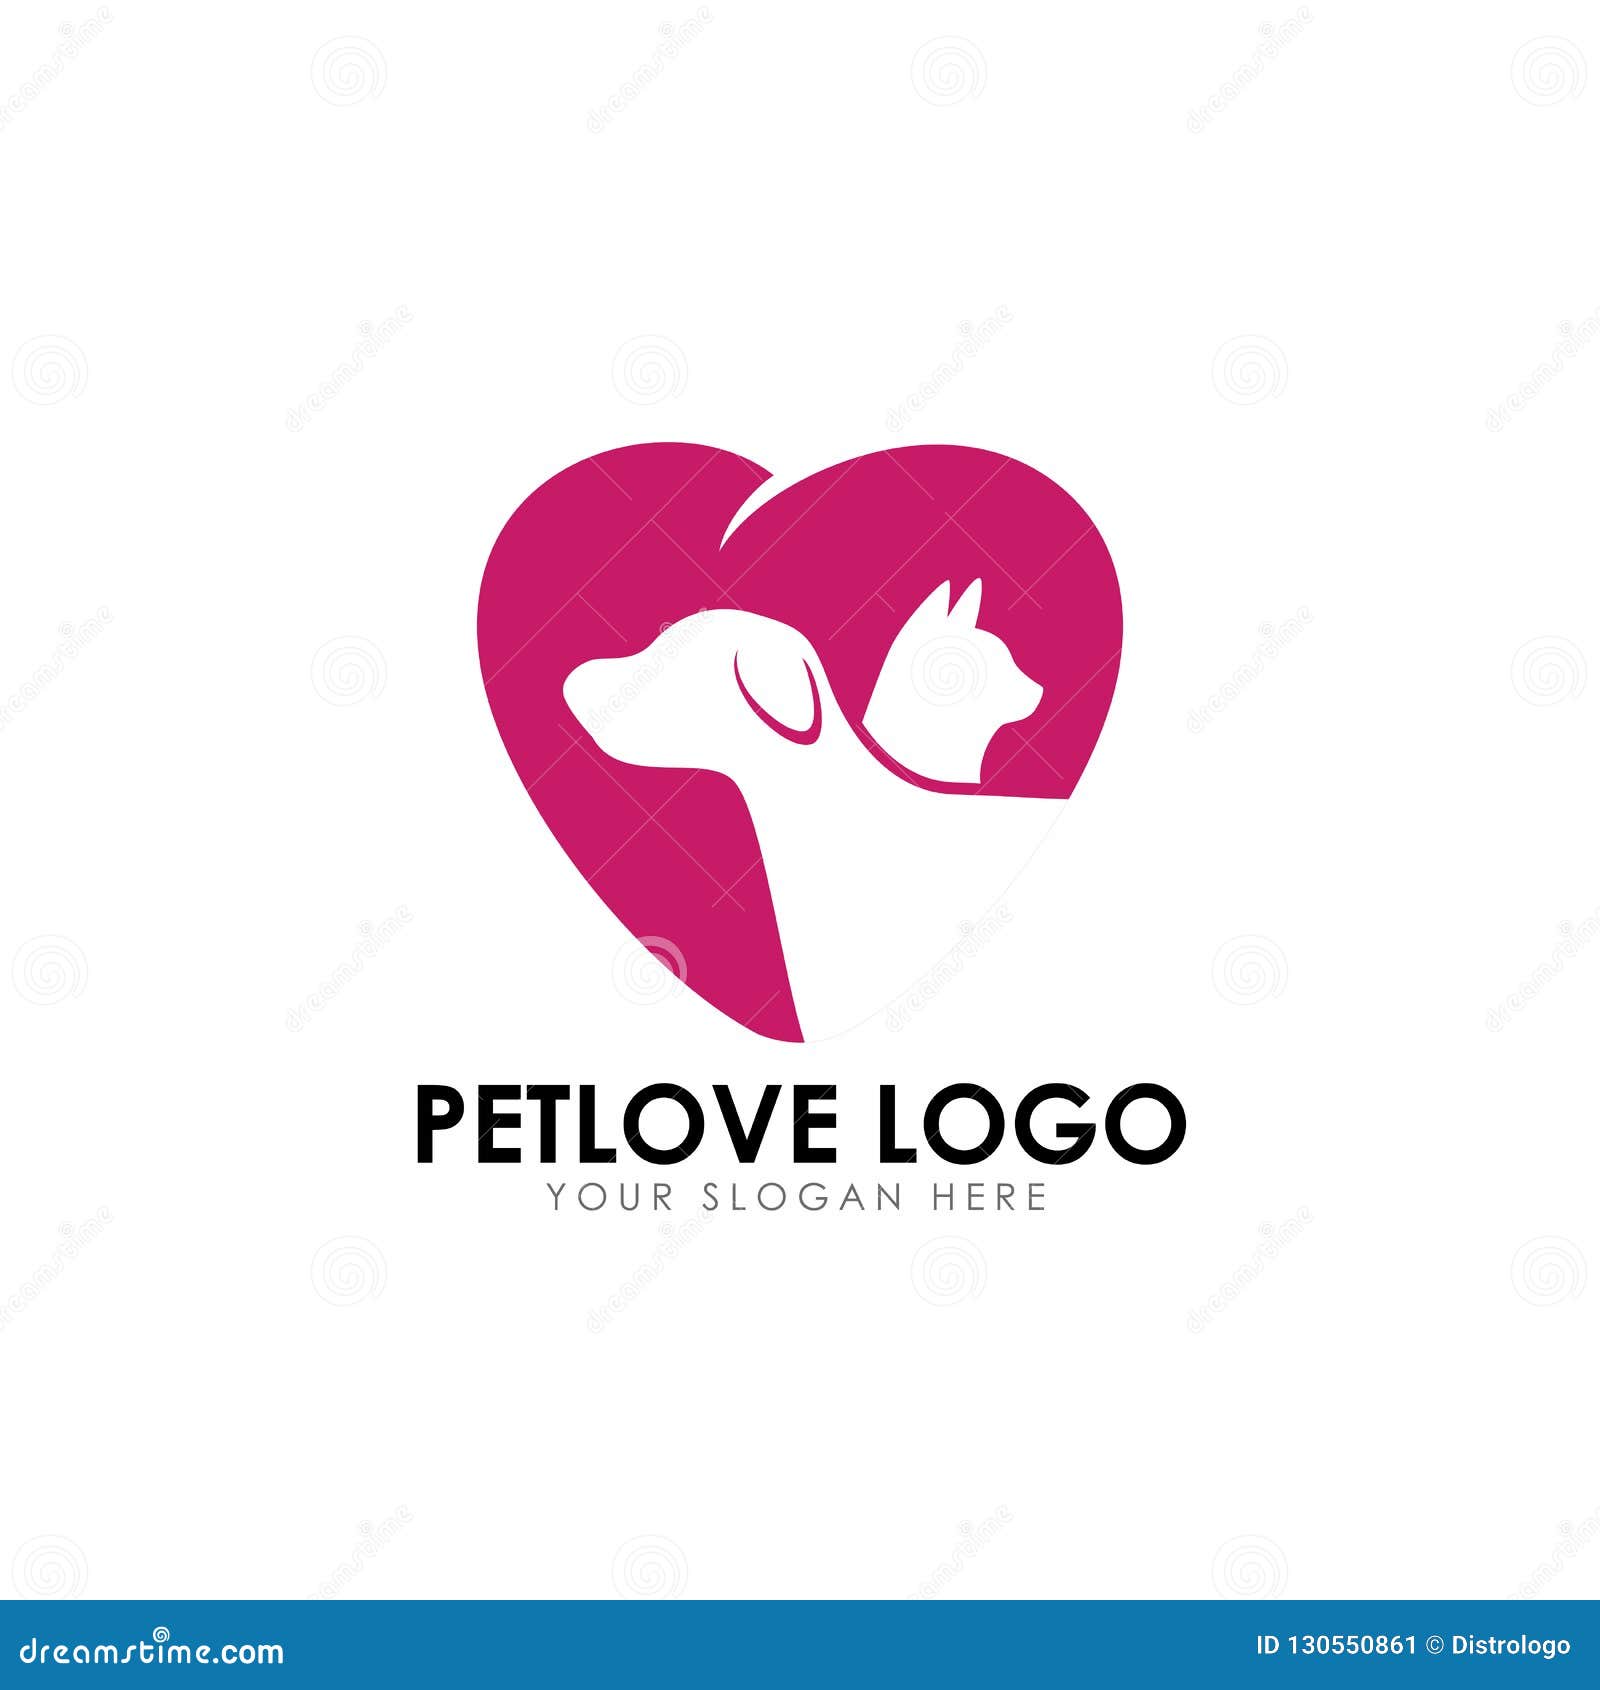 Premium Vector  Kitten cats pets love heart love care colorful modern  mascot logo vector icon illustration